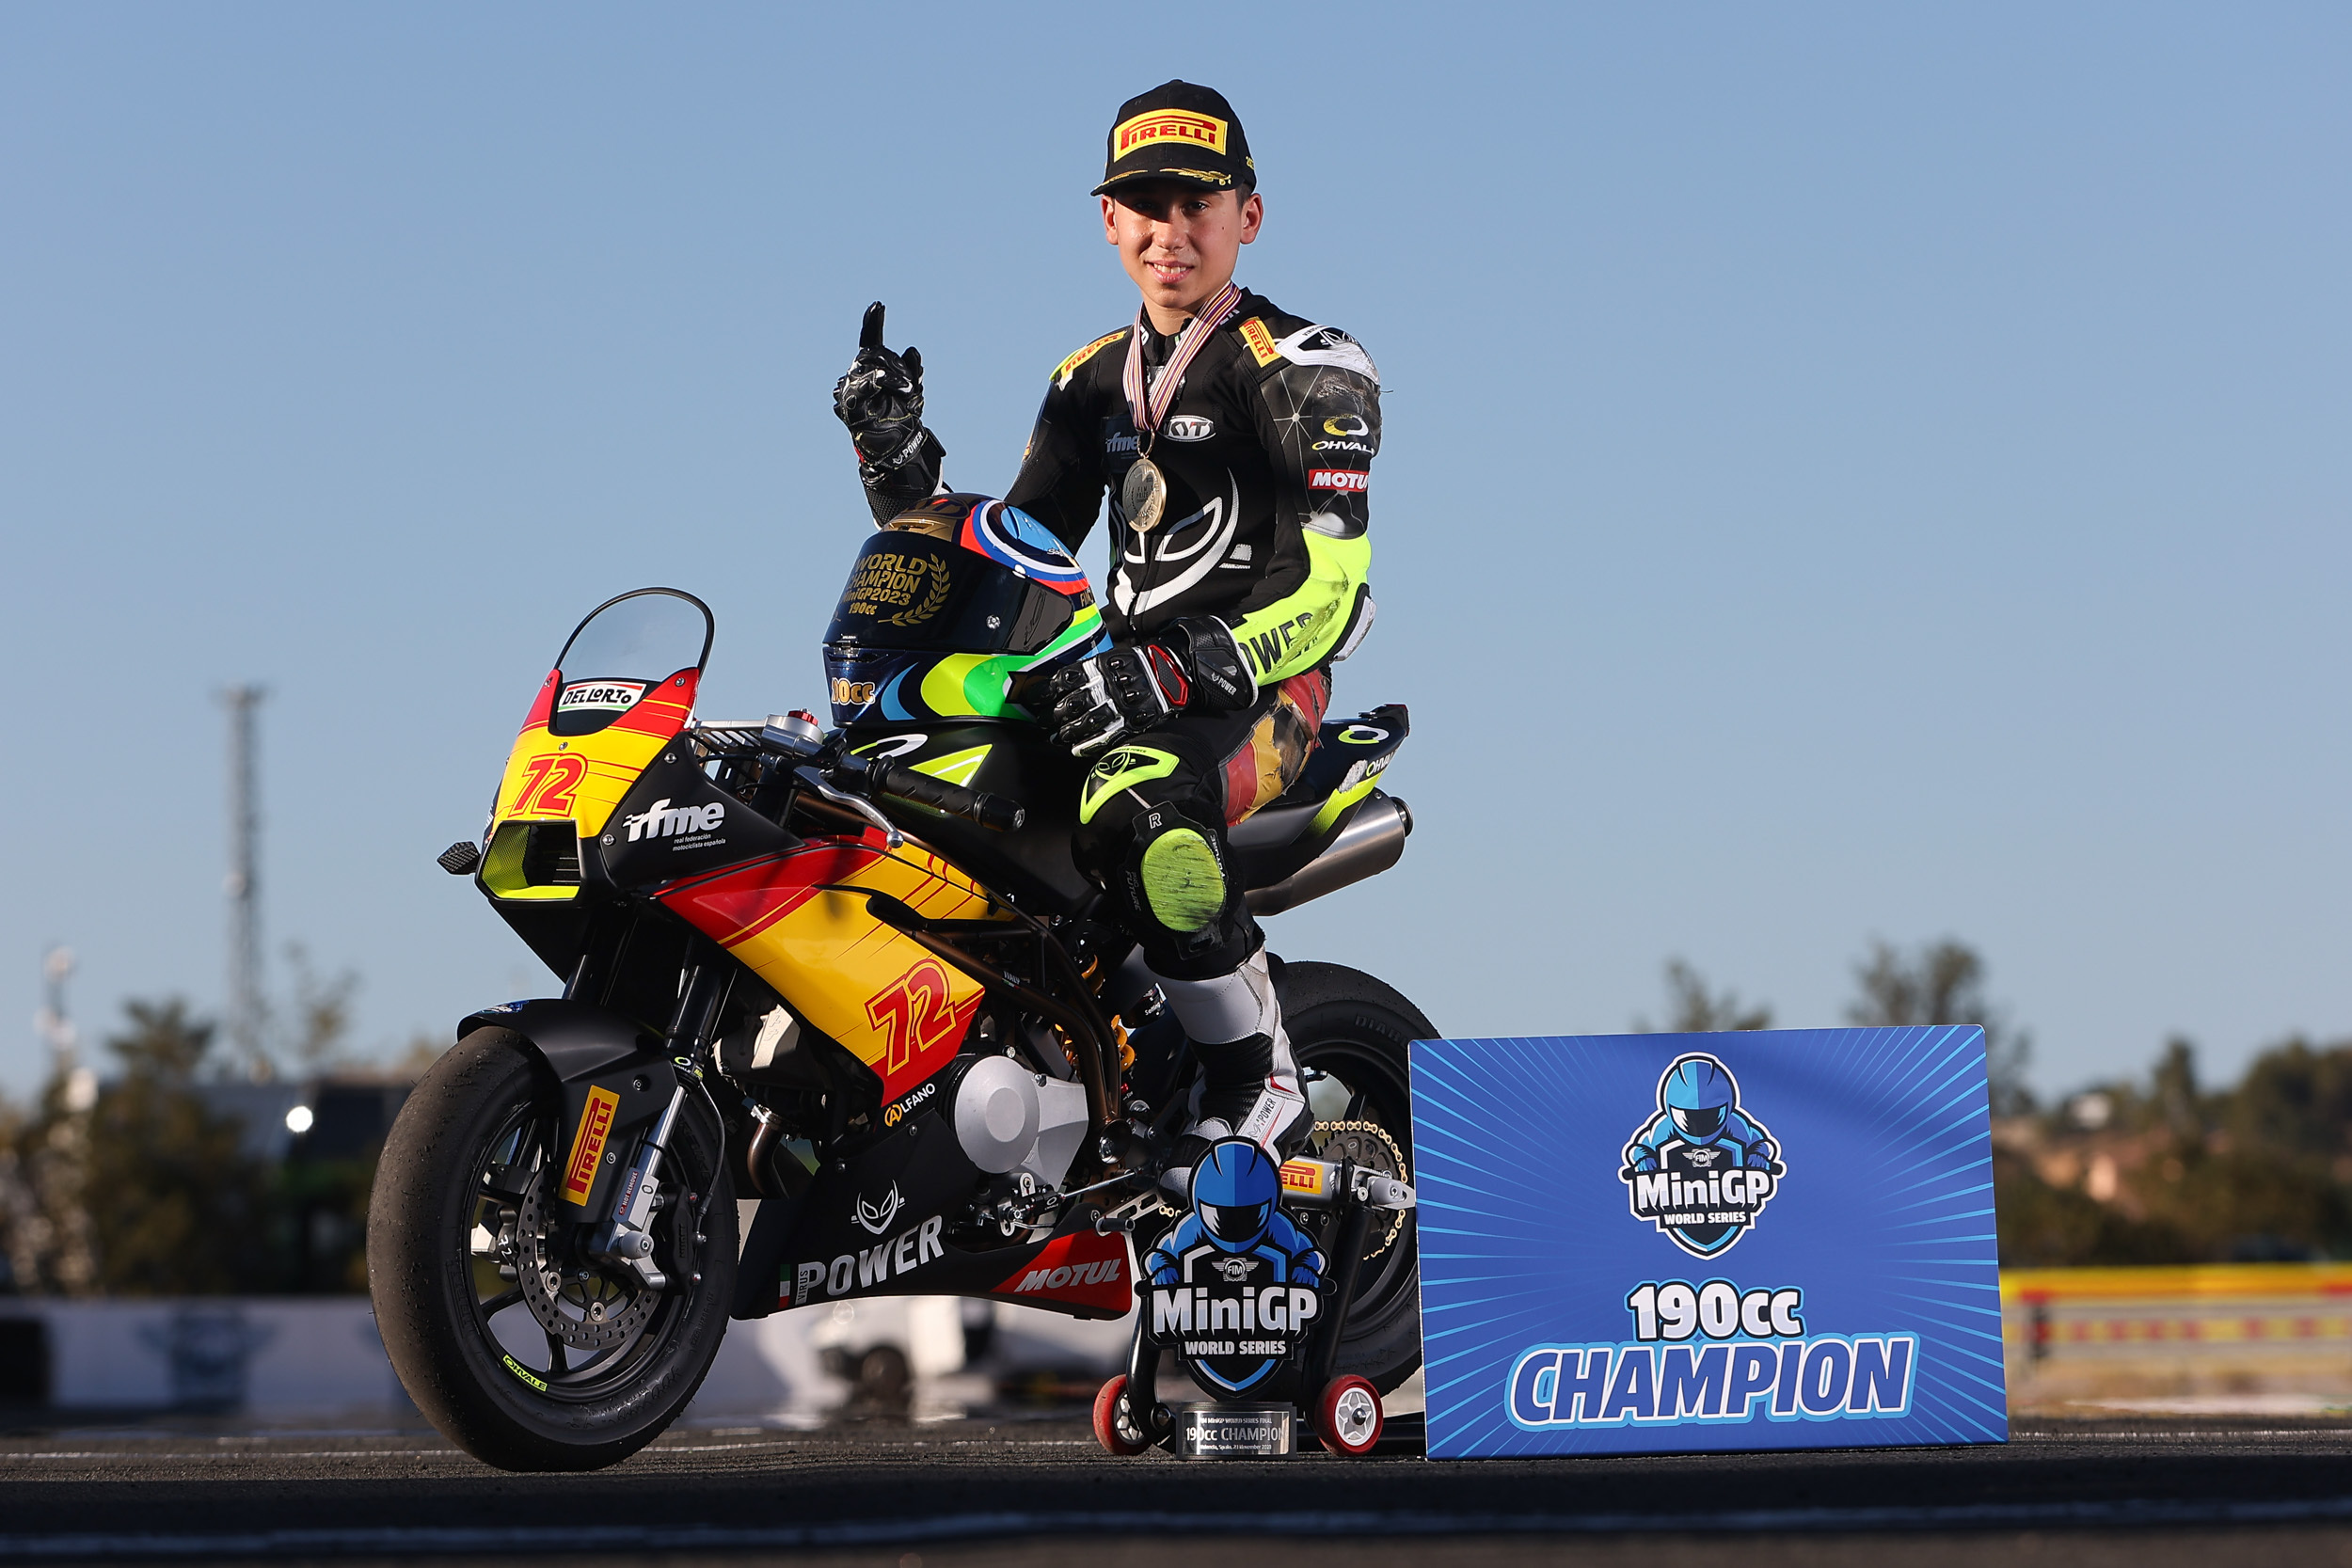 Alvaro Lucas is crowned the 190cc Champion at the Circuit Ricardo Tormo